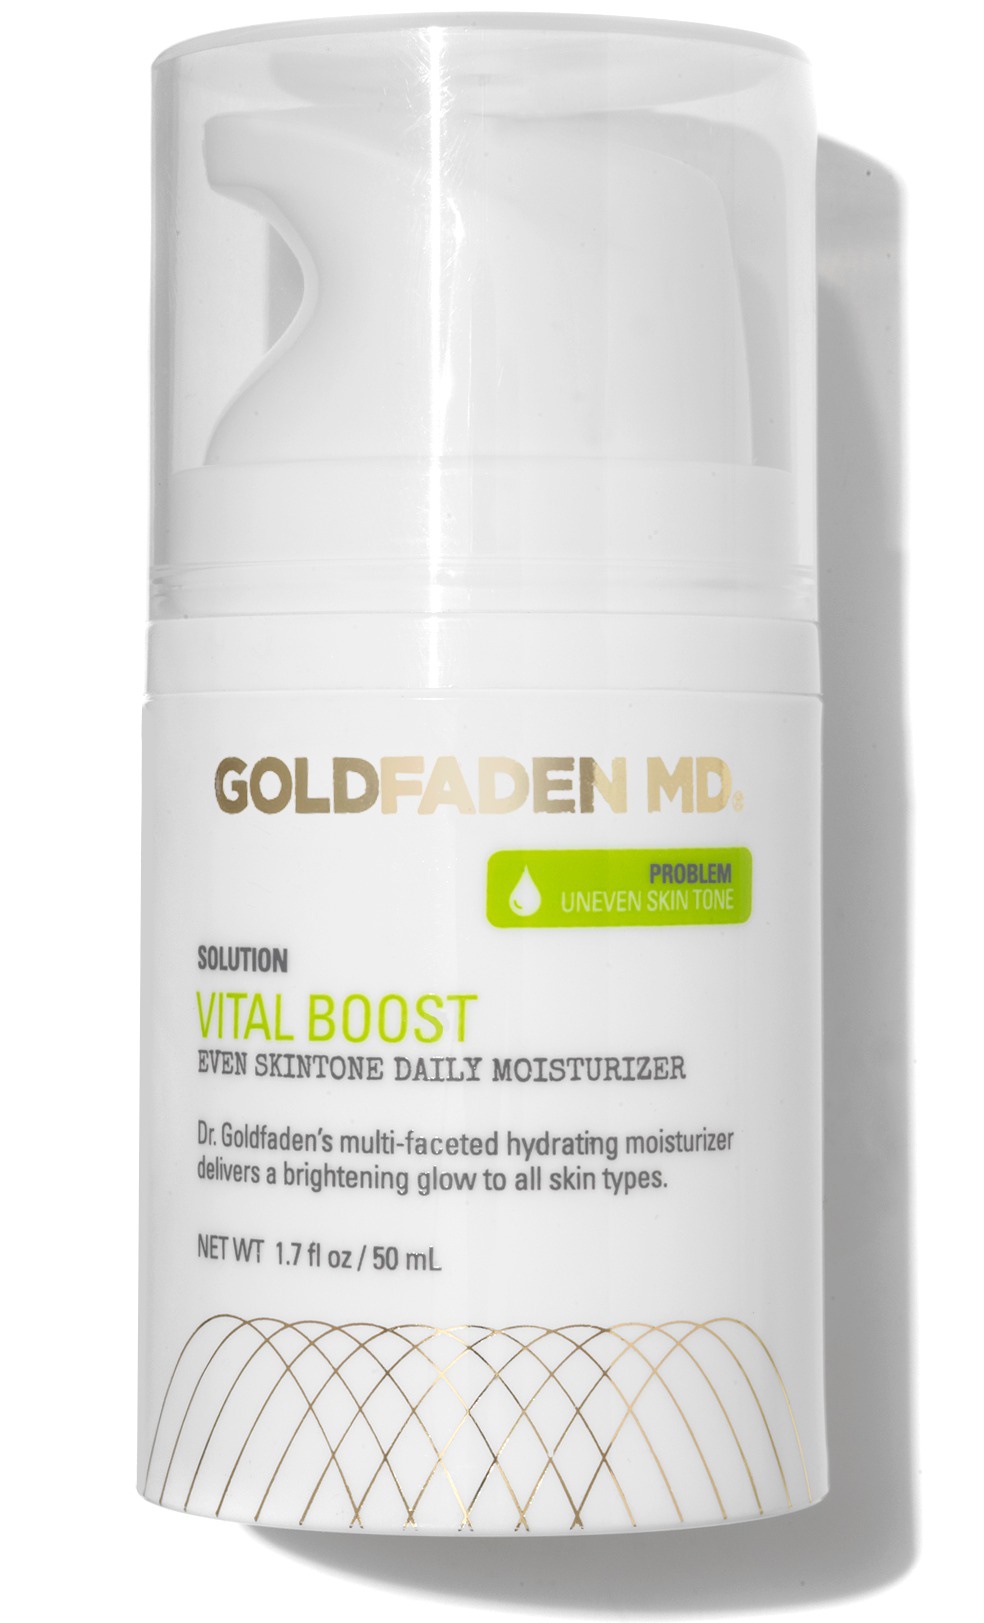 Goldfaden MD Vital Boost Even Skintone Daily Moisturiser